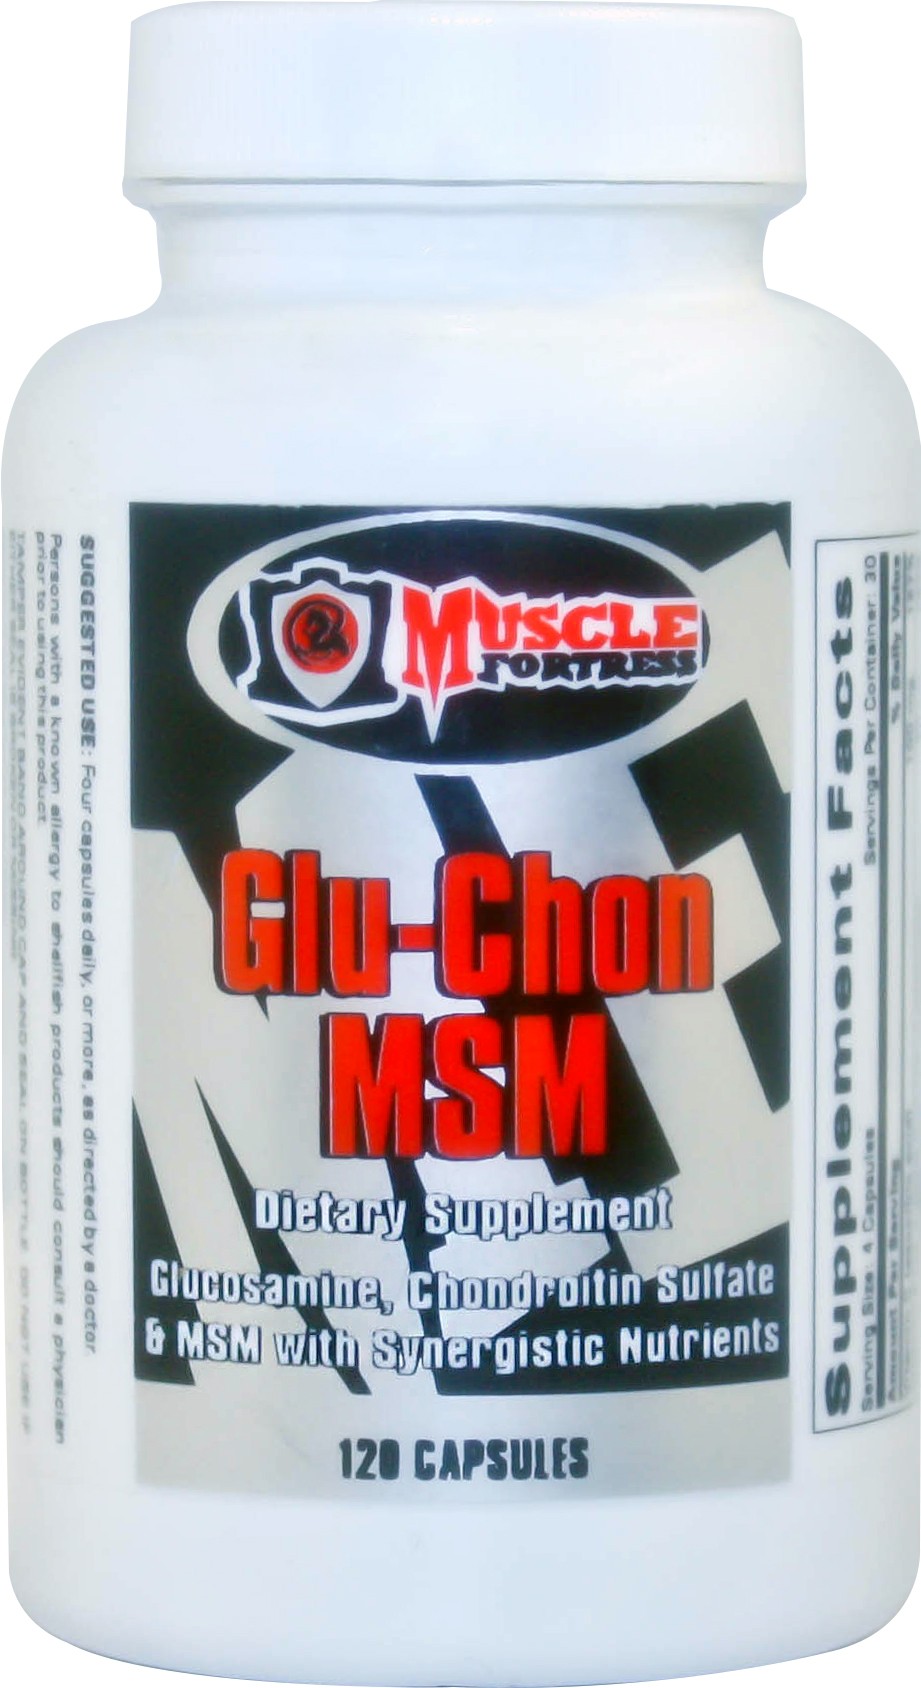 Glu-Chon MSM